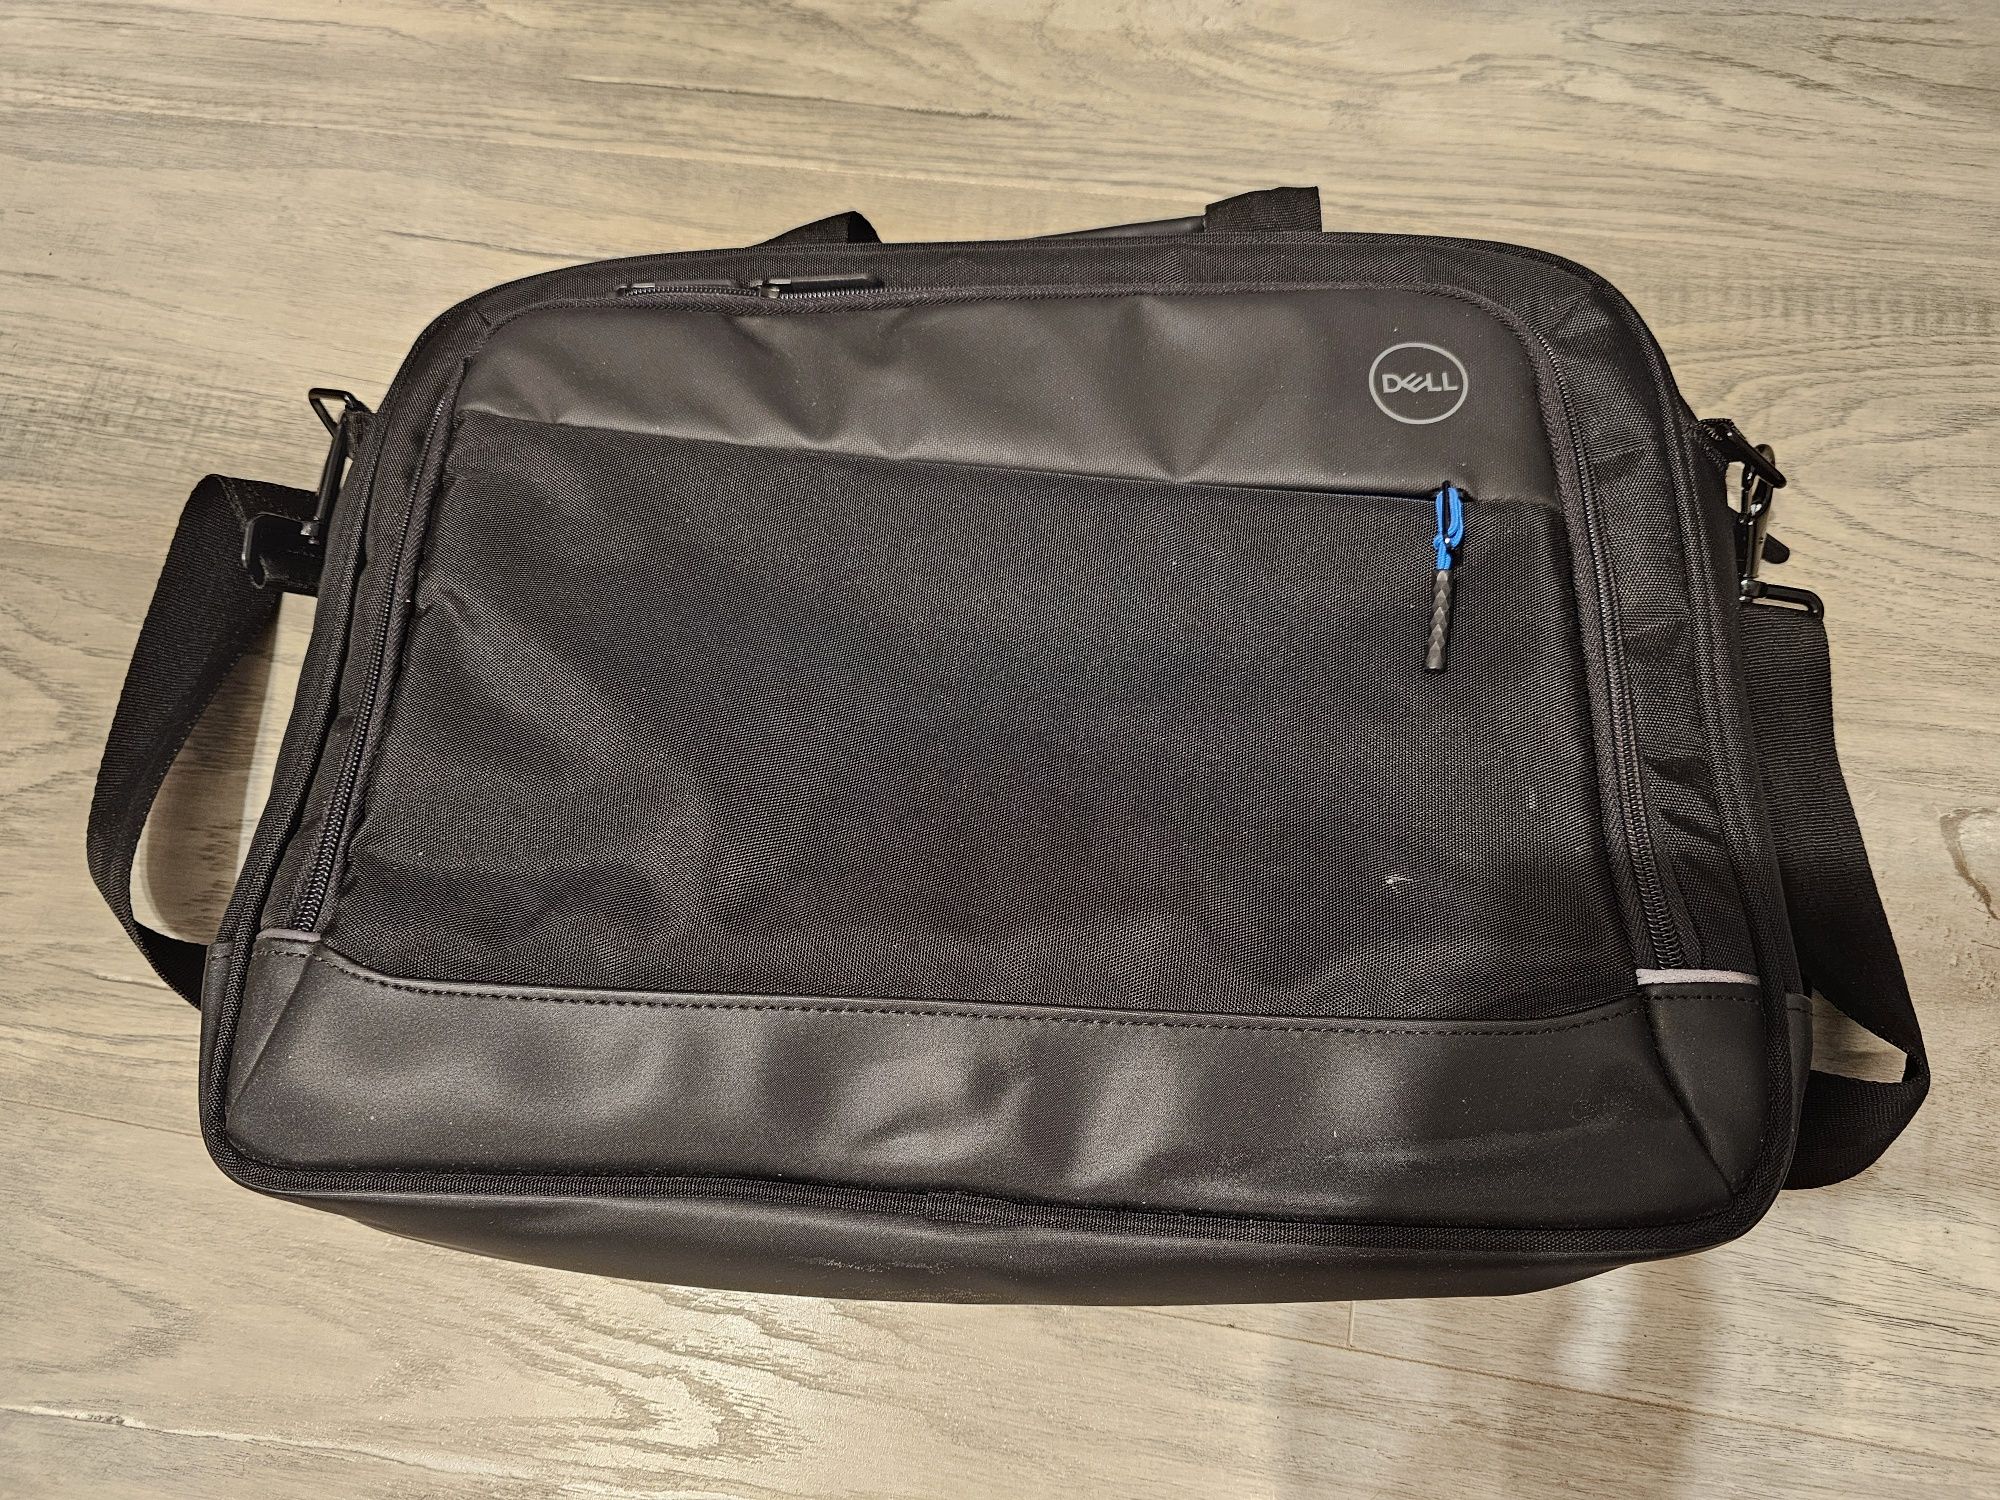 Vand geanta laptop Dell si ghiozdan laptop caselogic